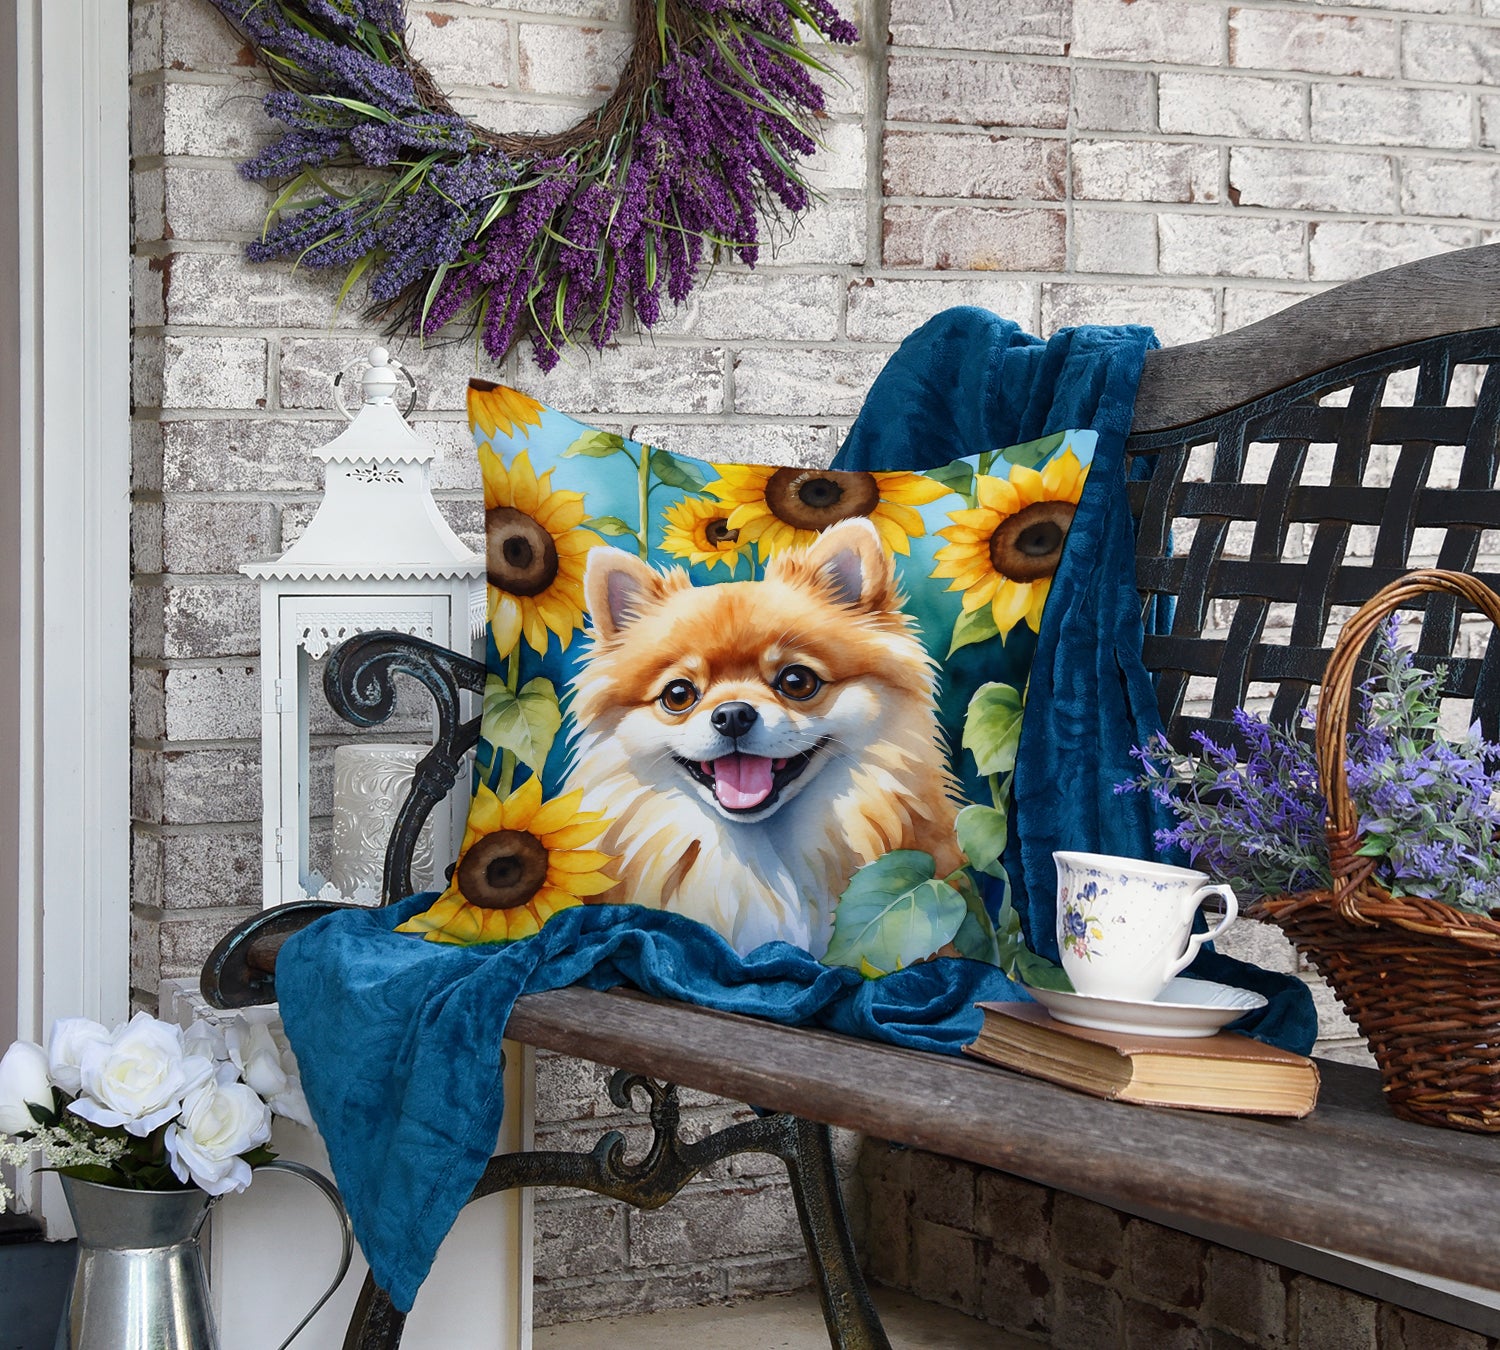 Pomeranian in Sunflowers Throw Pillow